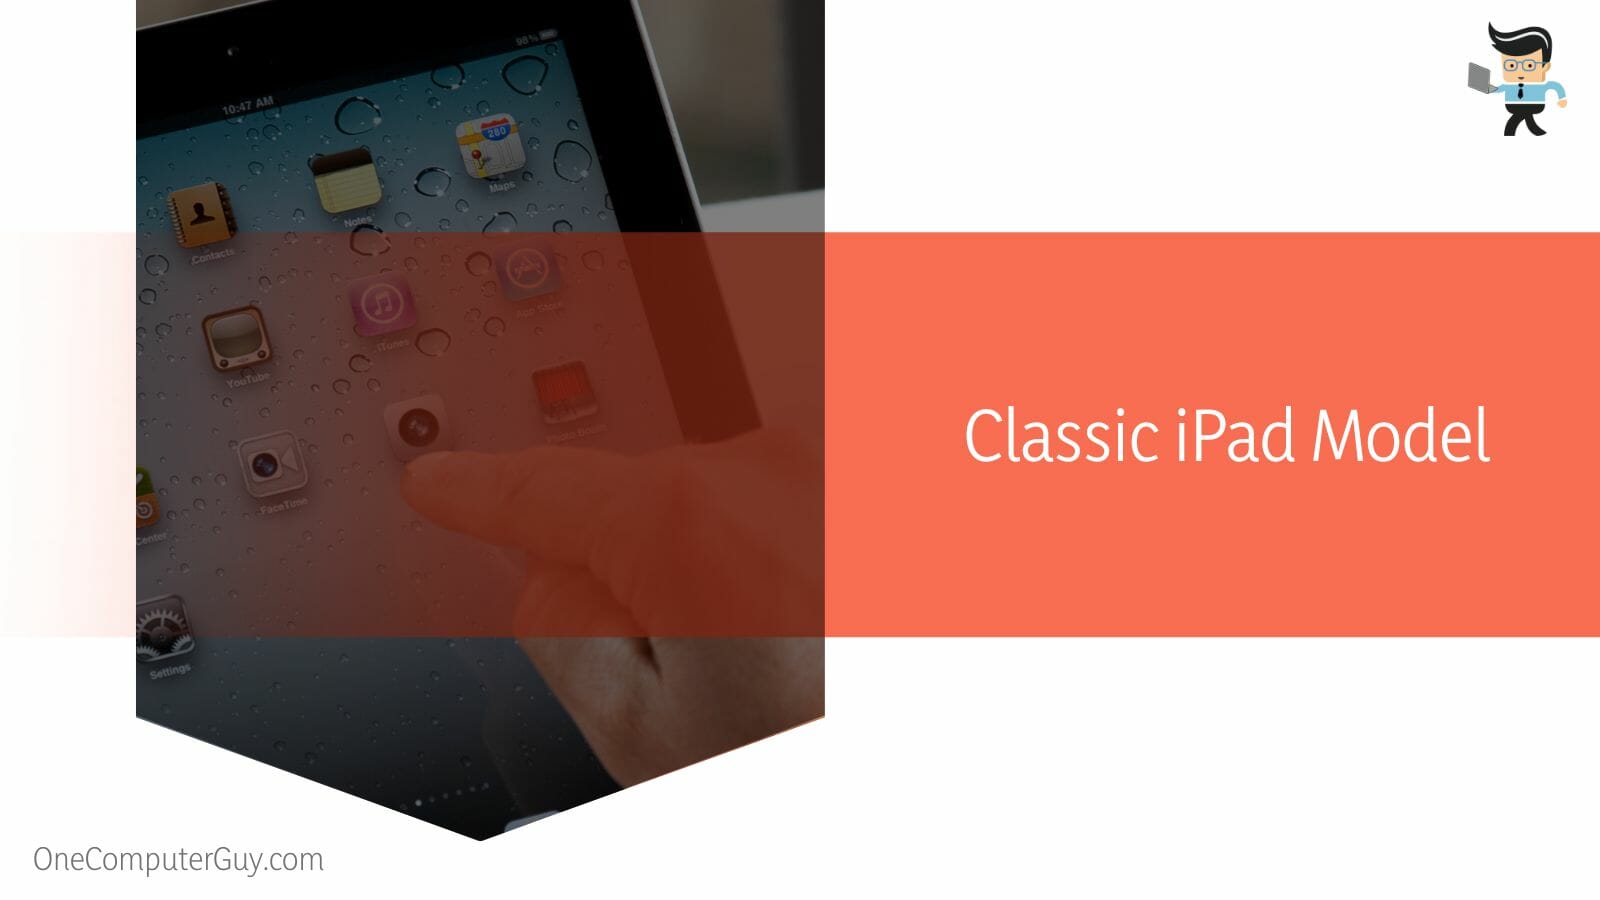 Charging Time of Classic iPad Model